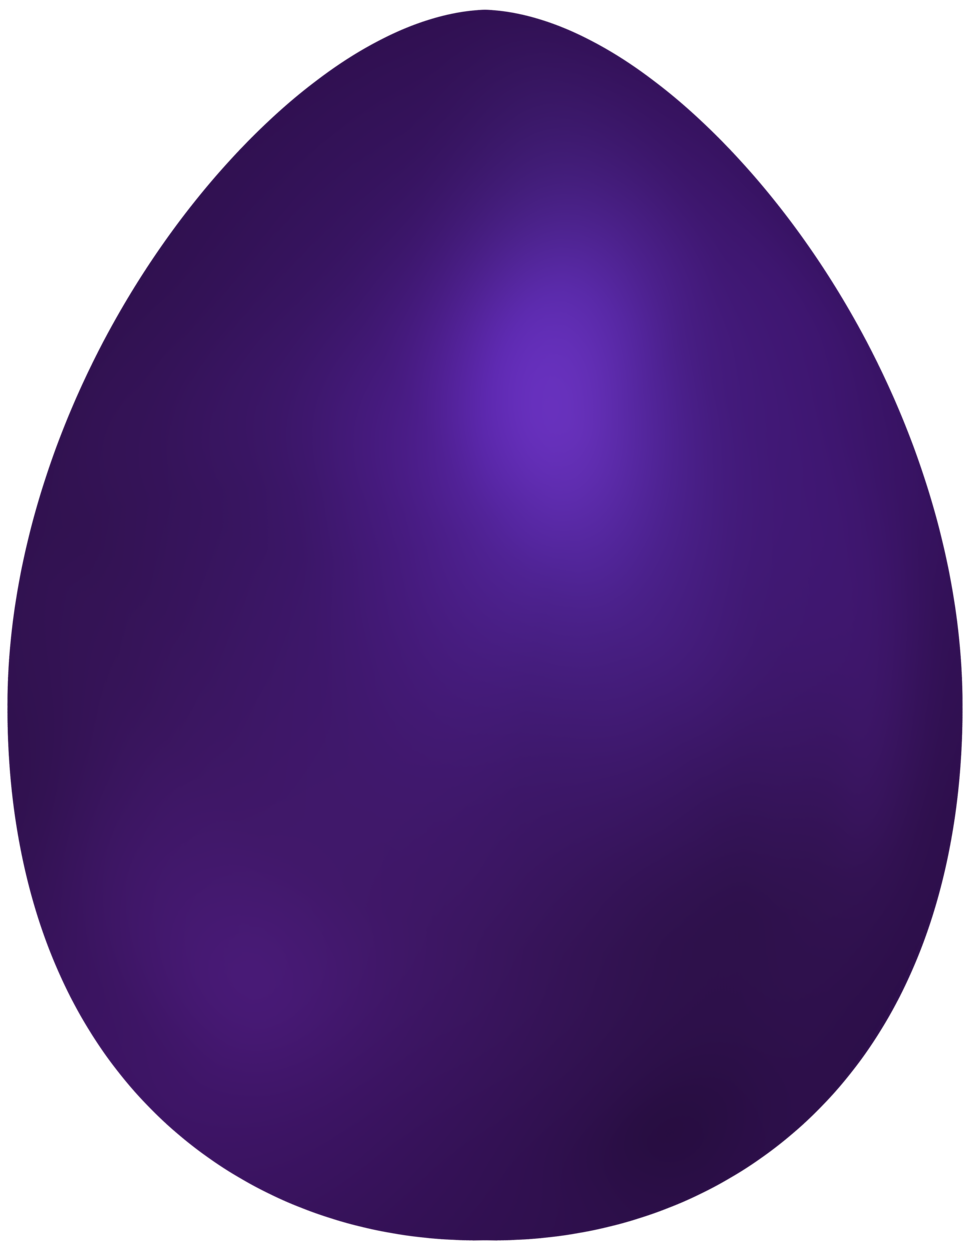 Egg purple